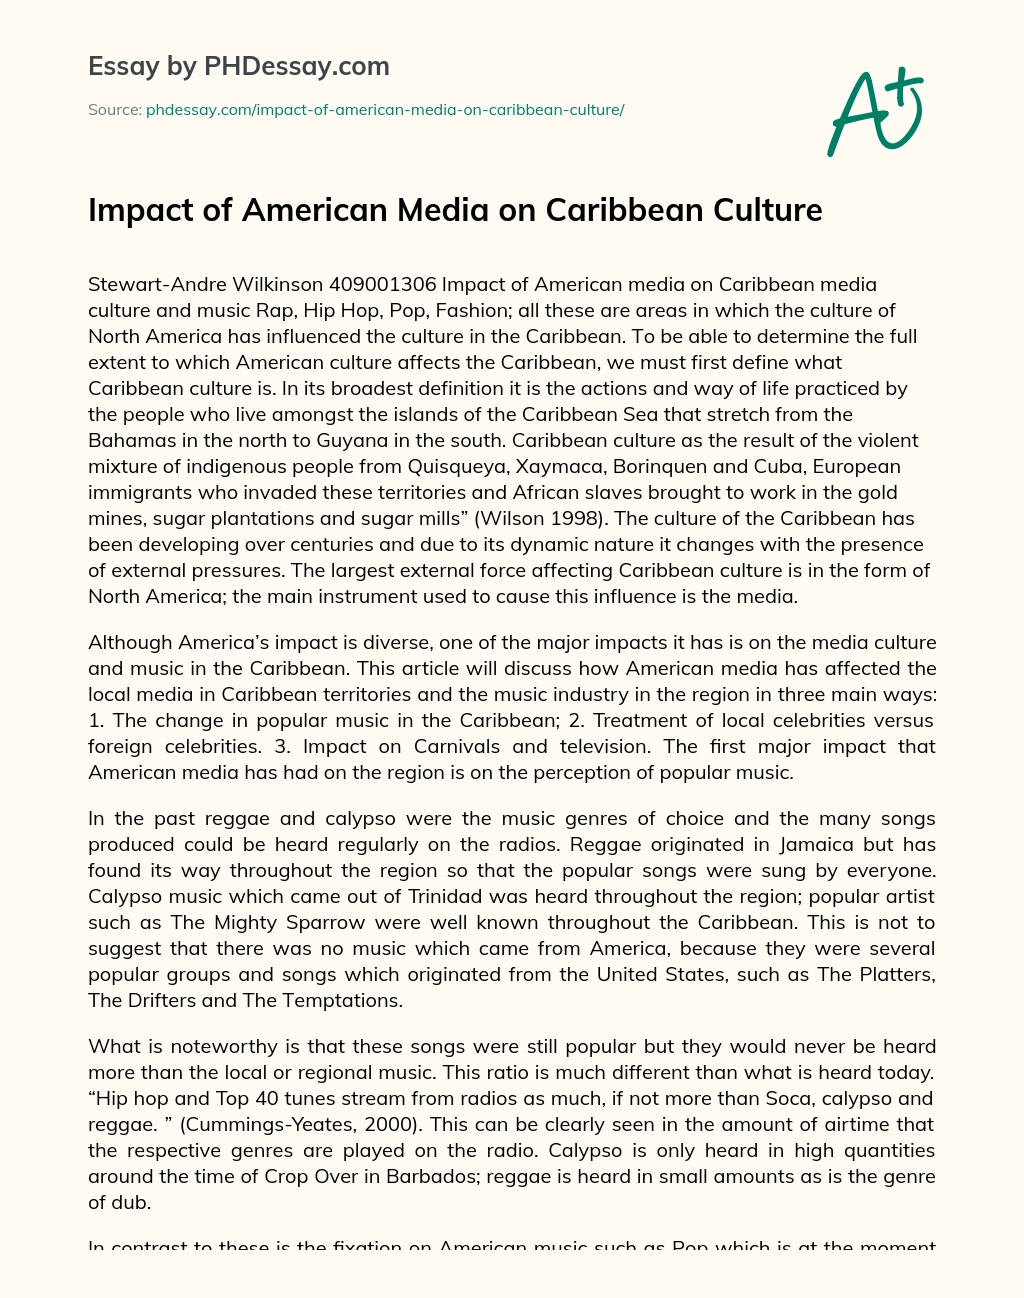 Impact of American Media on Caribbean Culture essay